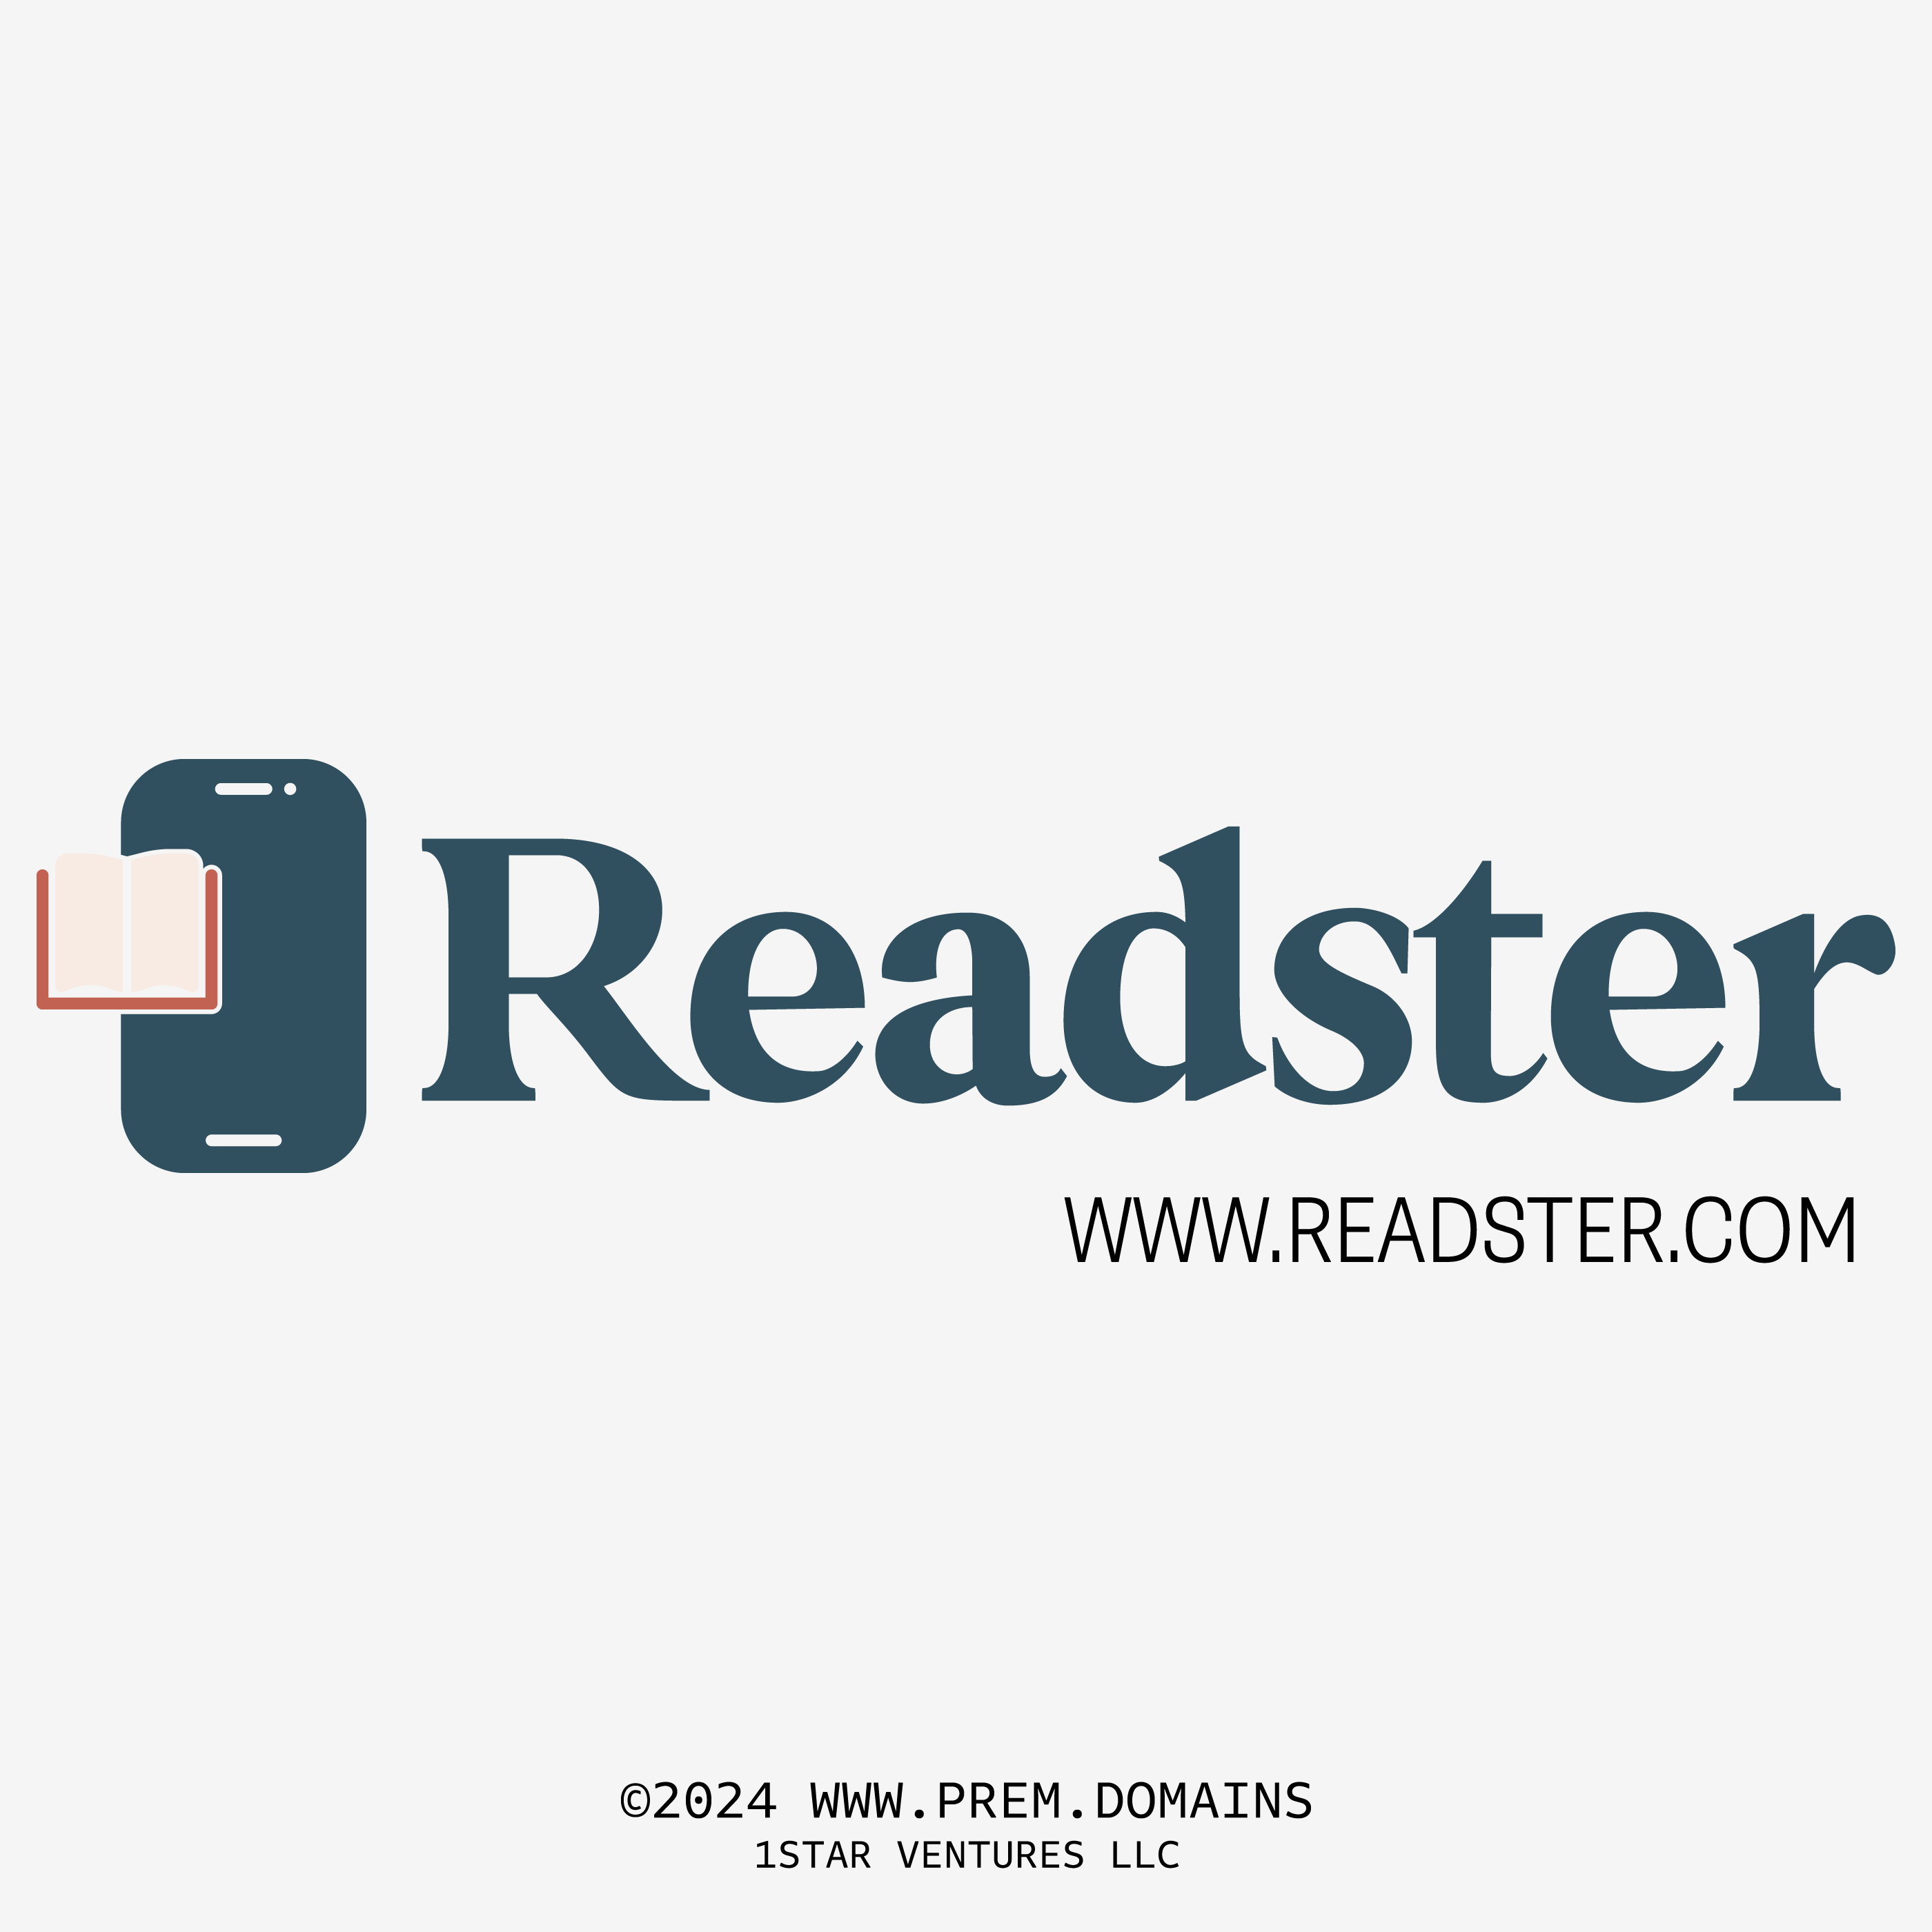 Readster.com custom logo product card image